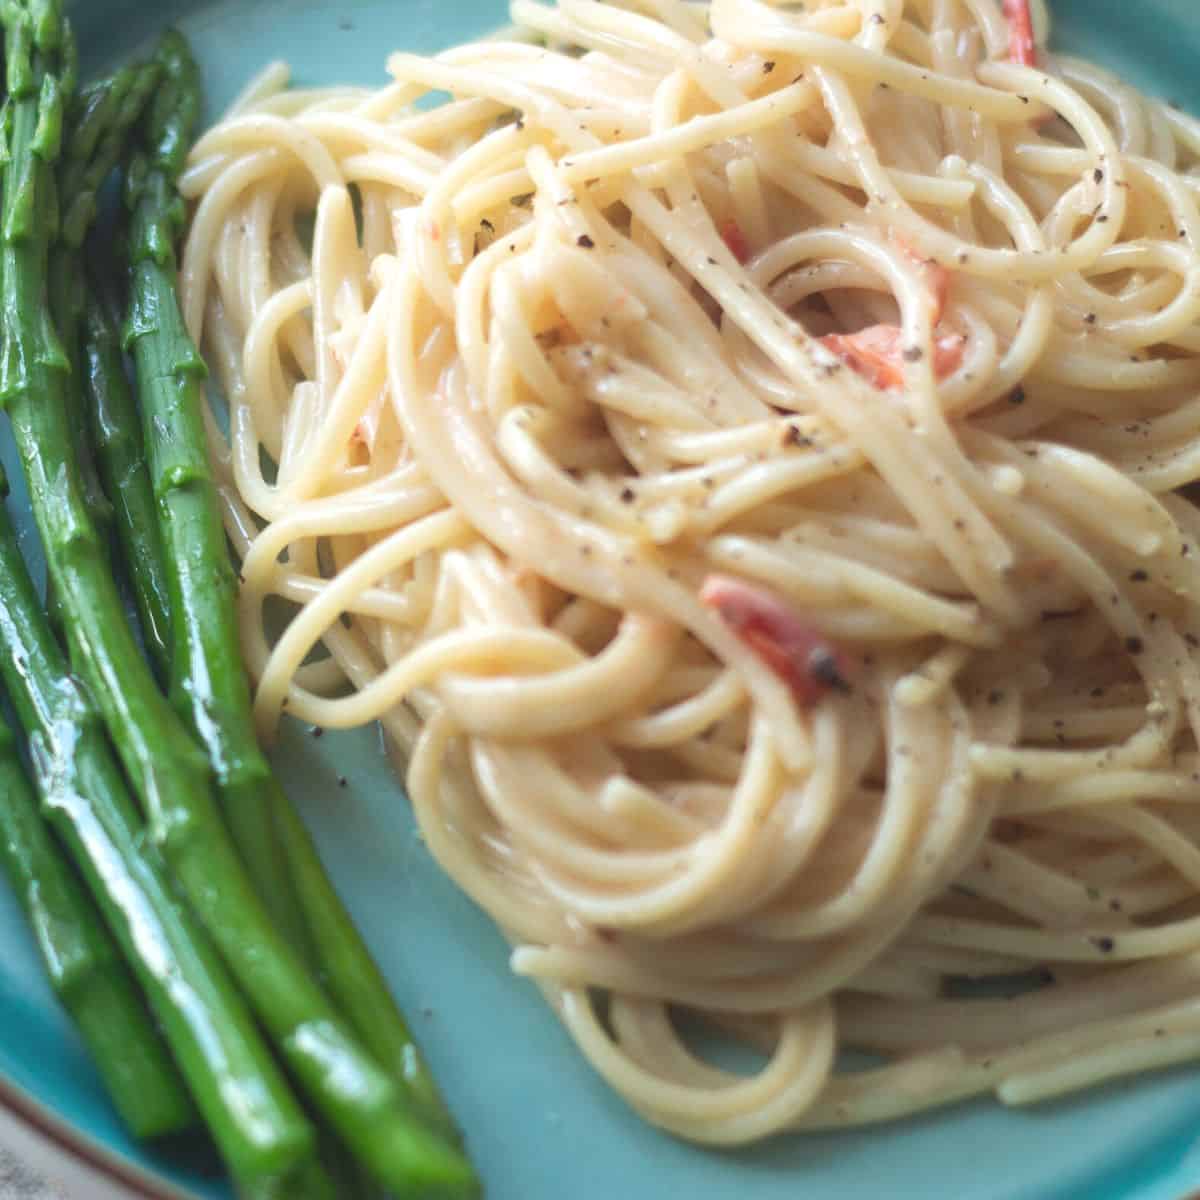 Spaghetti Carbonara with asparagus